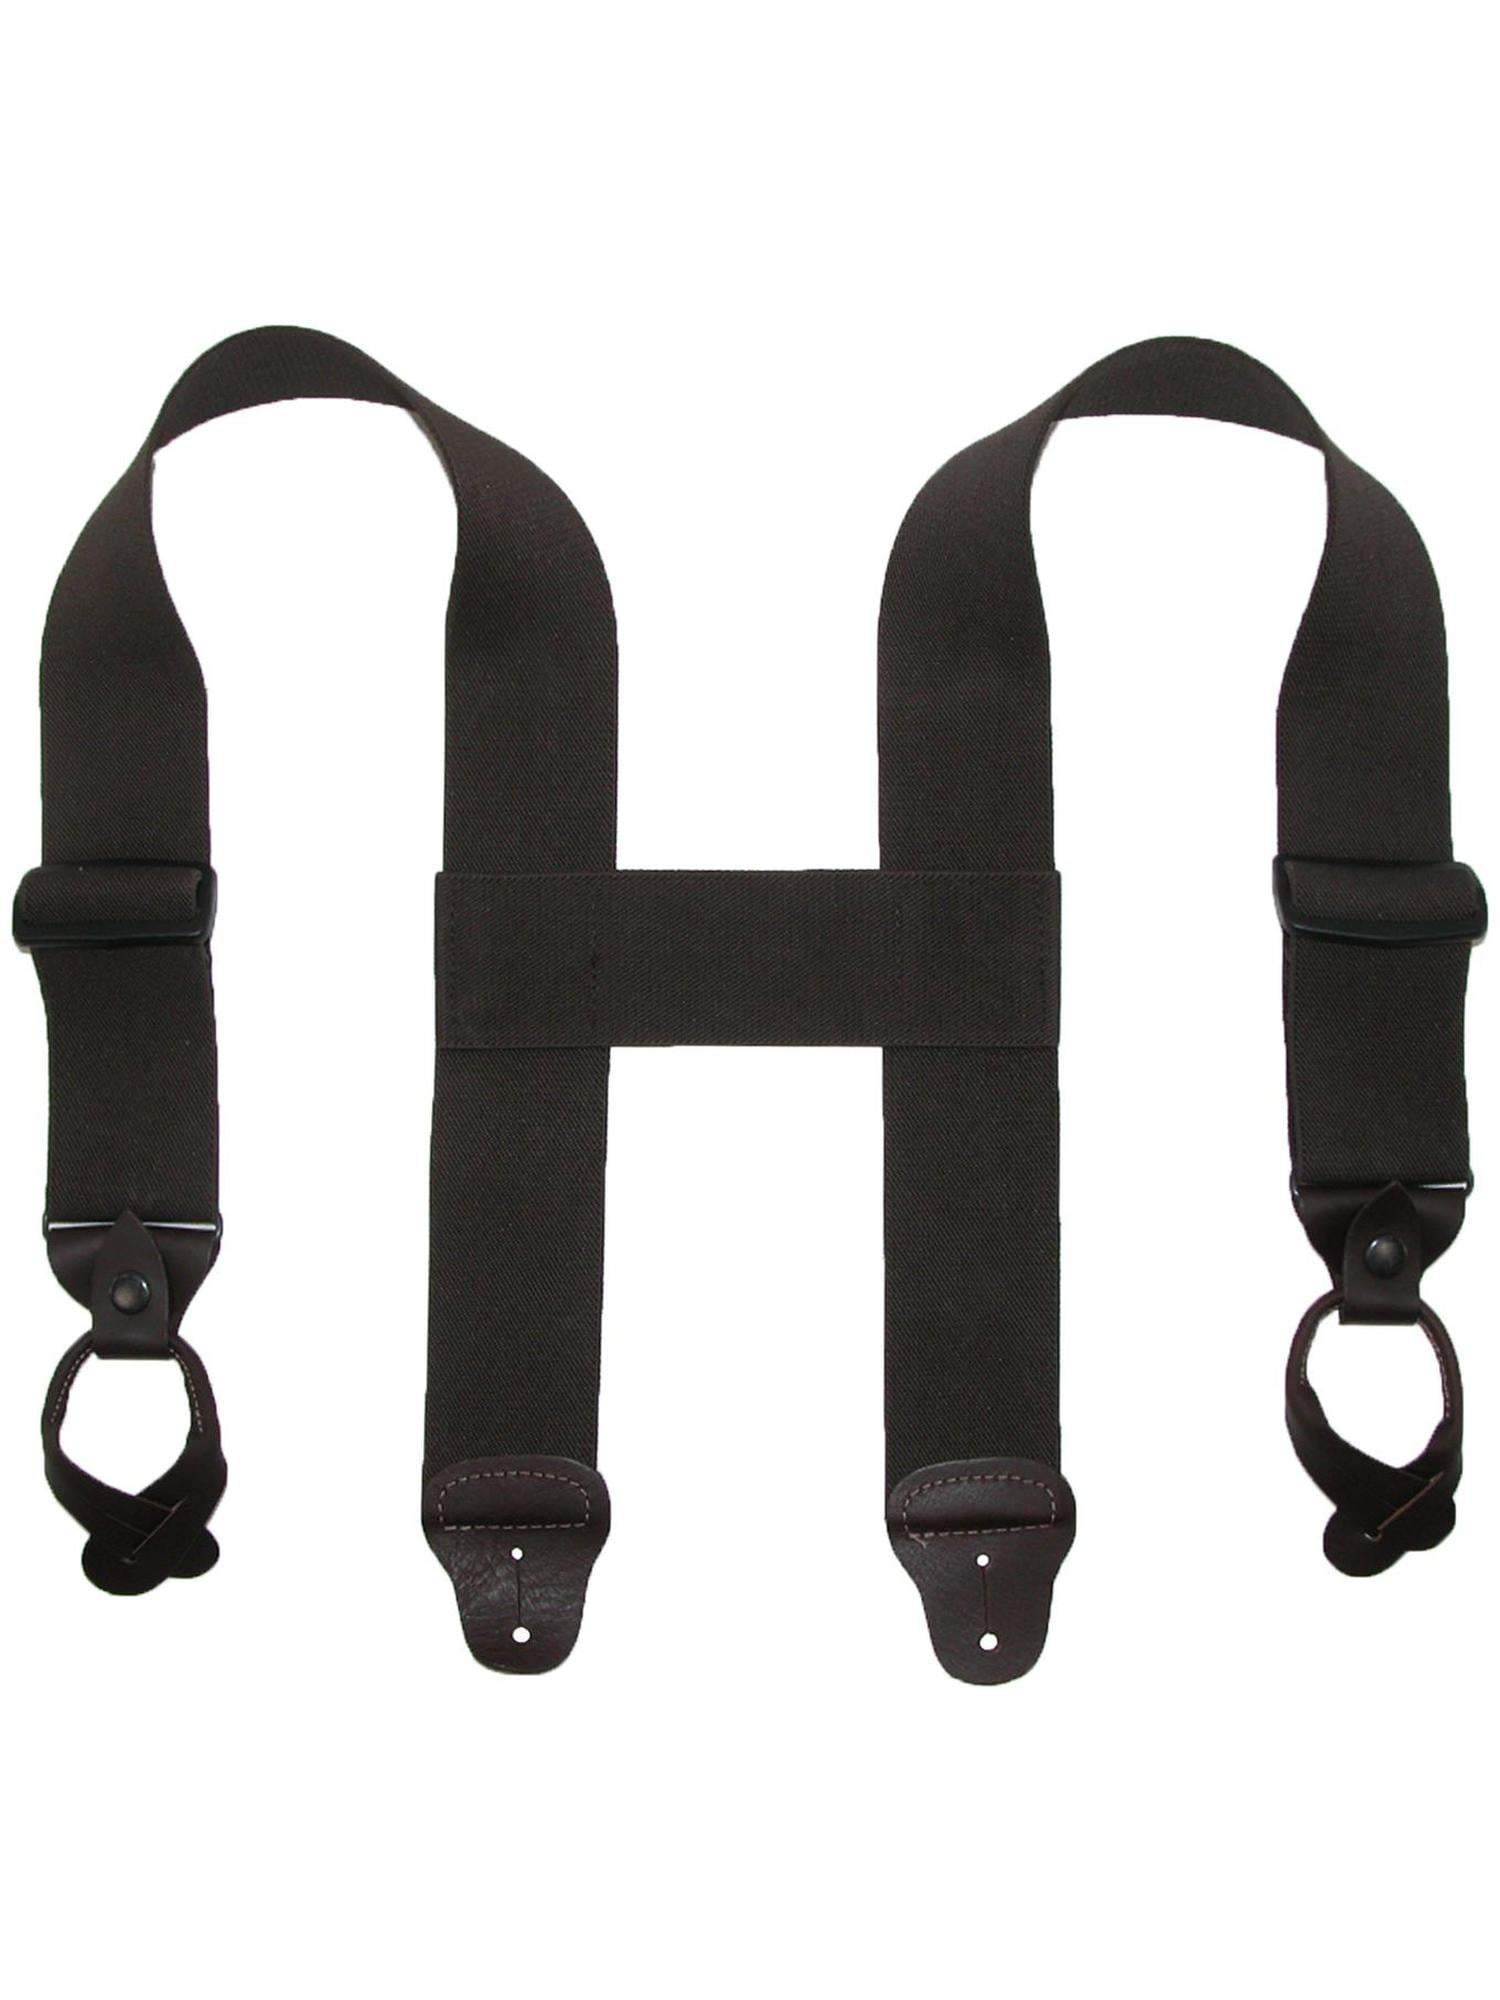 5ive Star Gear Gi Spec Suspenders Black 4189000 for sale online 